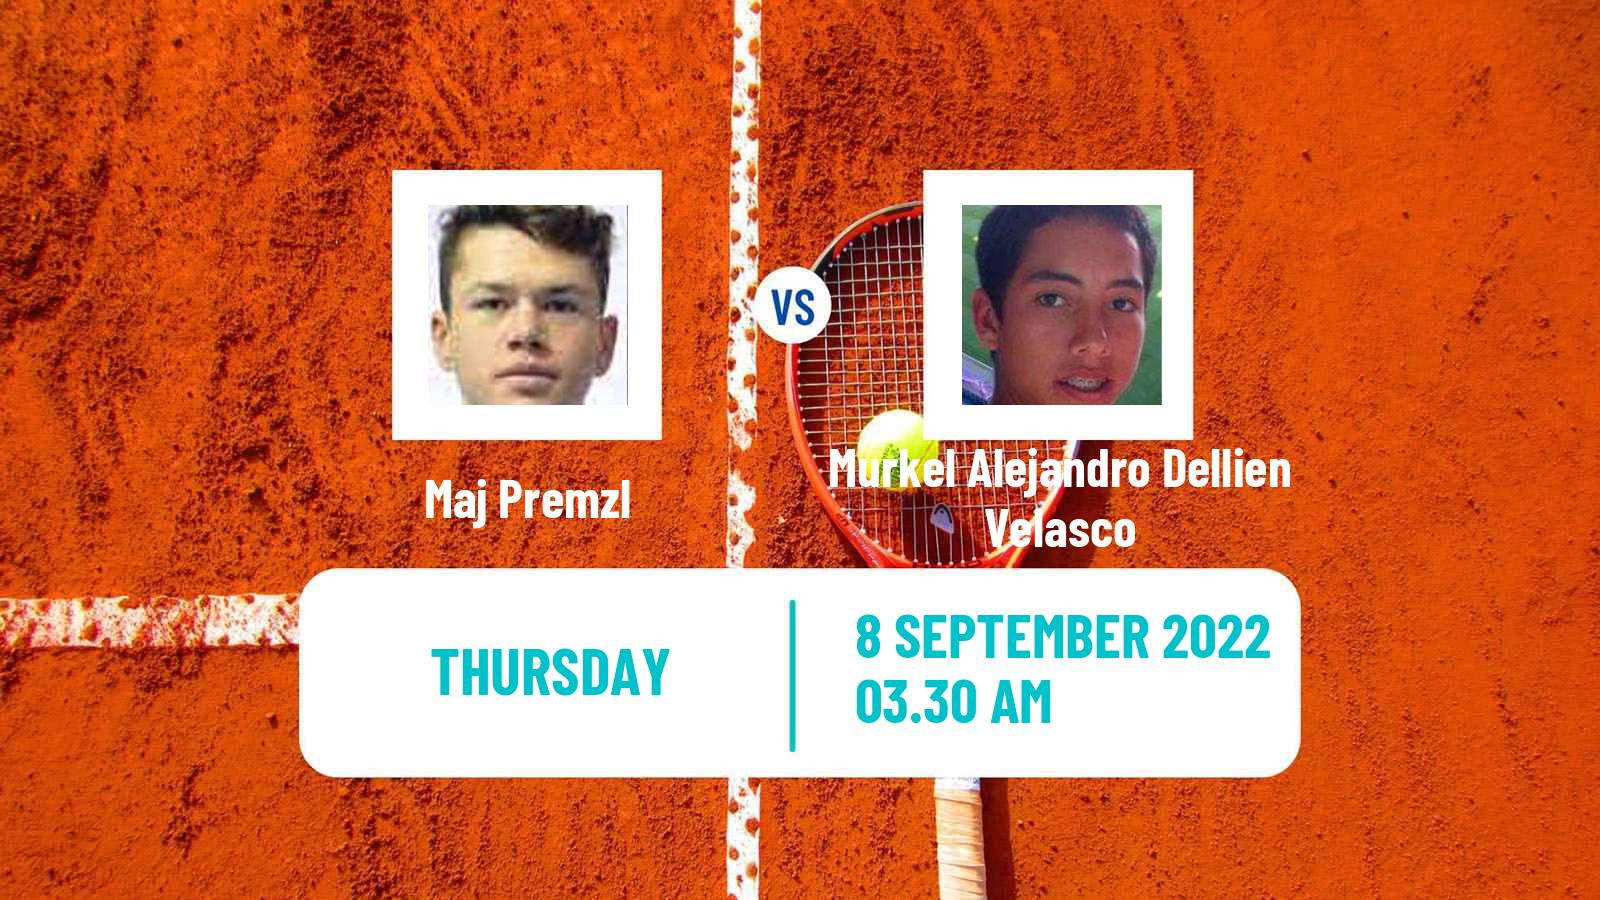 Tennis ITF Tournaments Maj Premzl - Murkel Alejandro Dellien Velasco